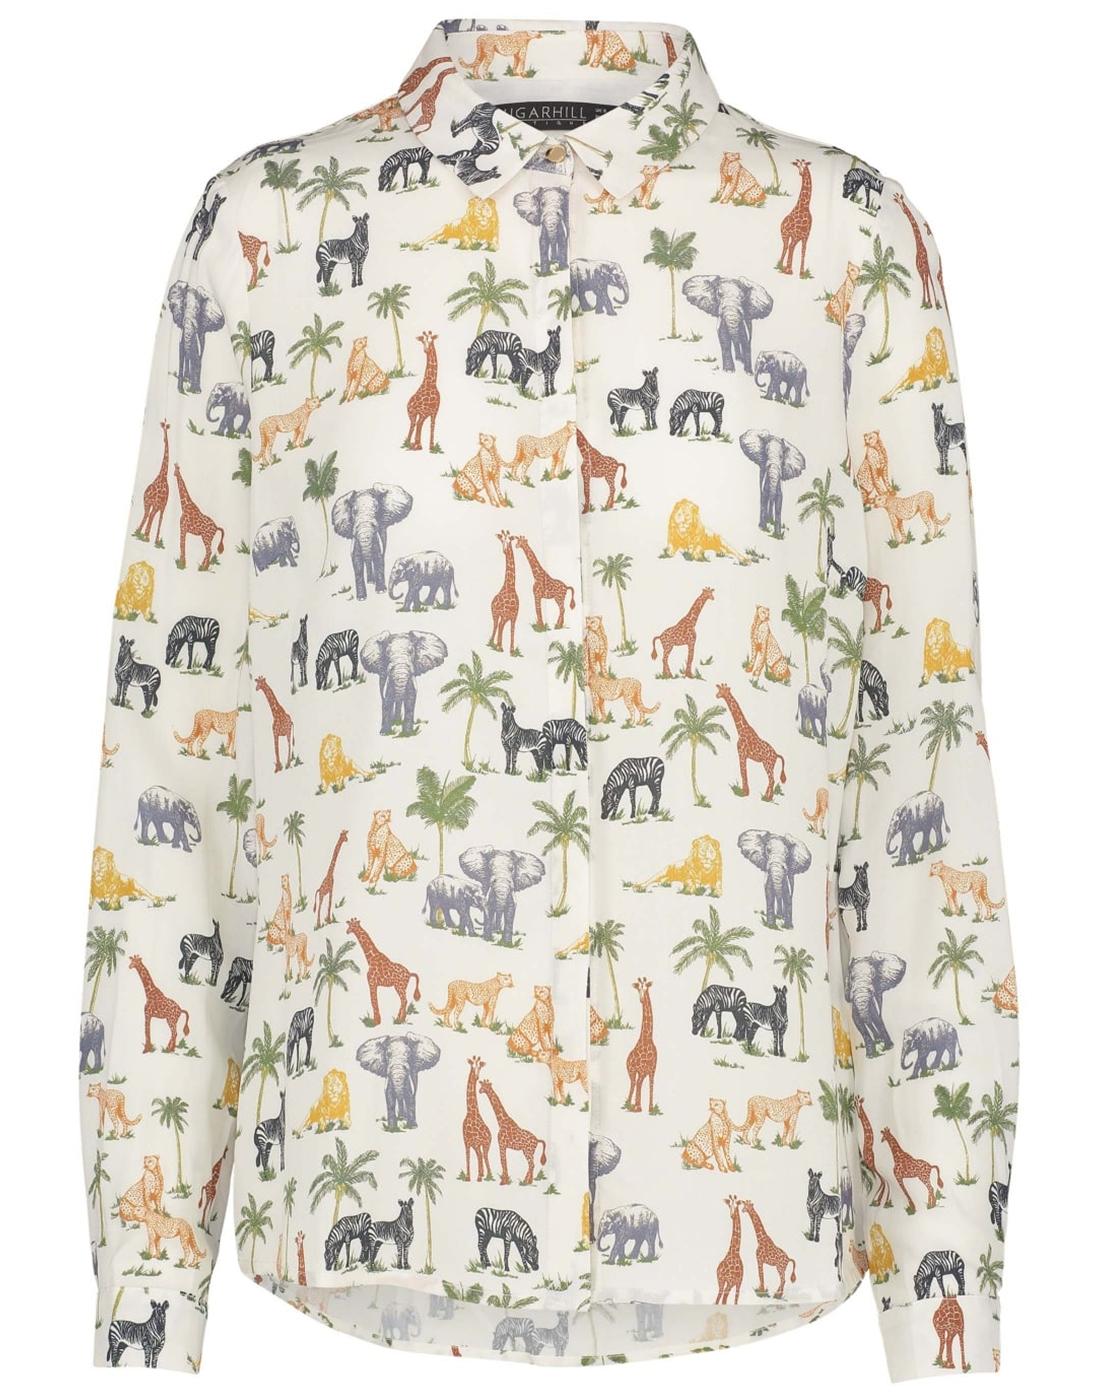 Blair SUGARHILL BOUTIQUE Retro Wild Animal Shirt